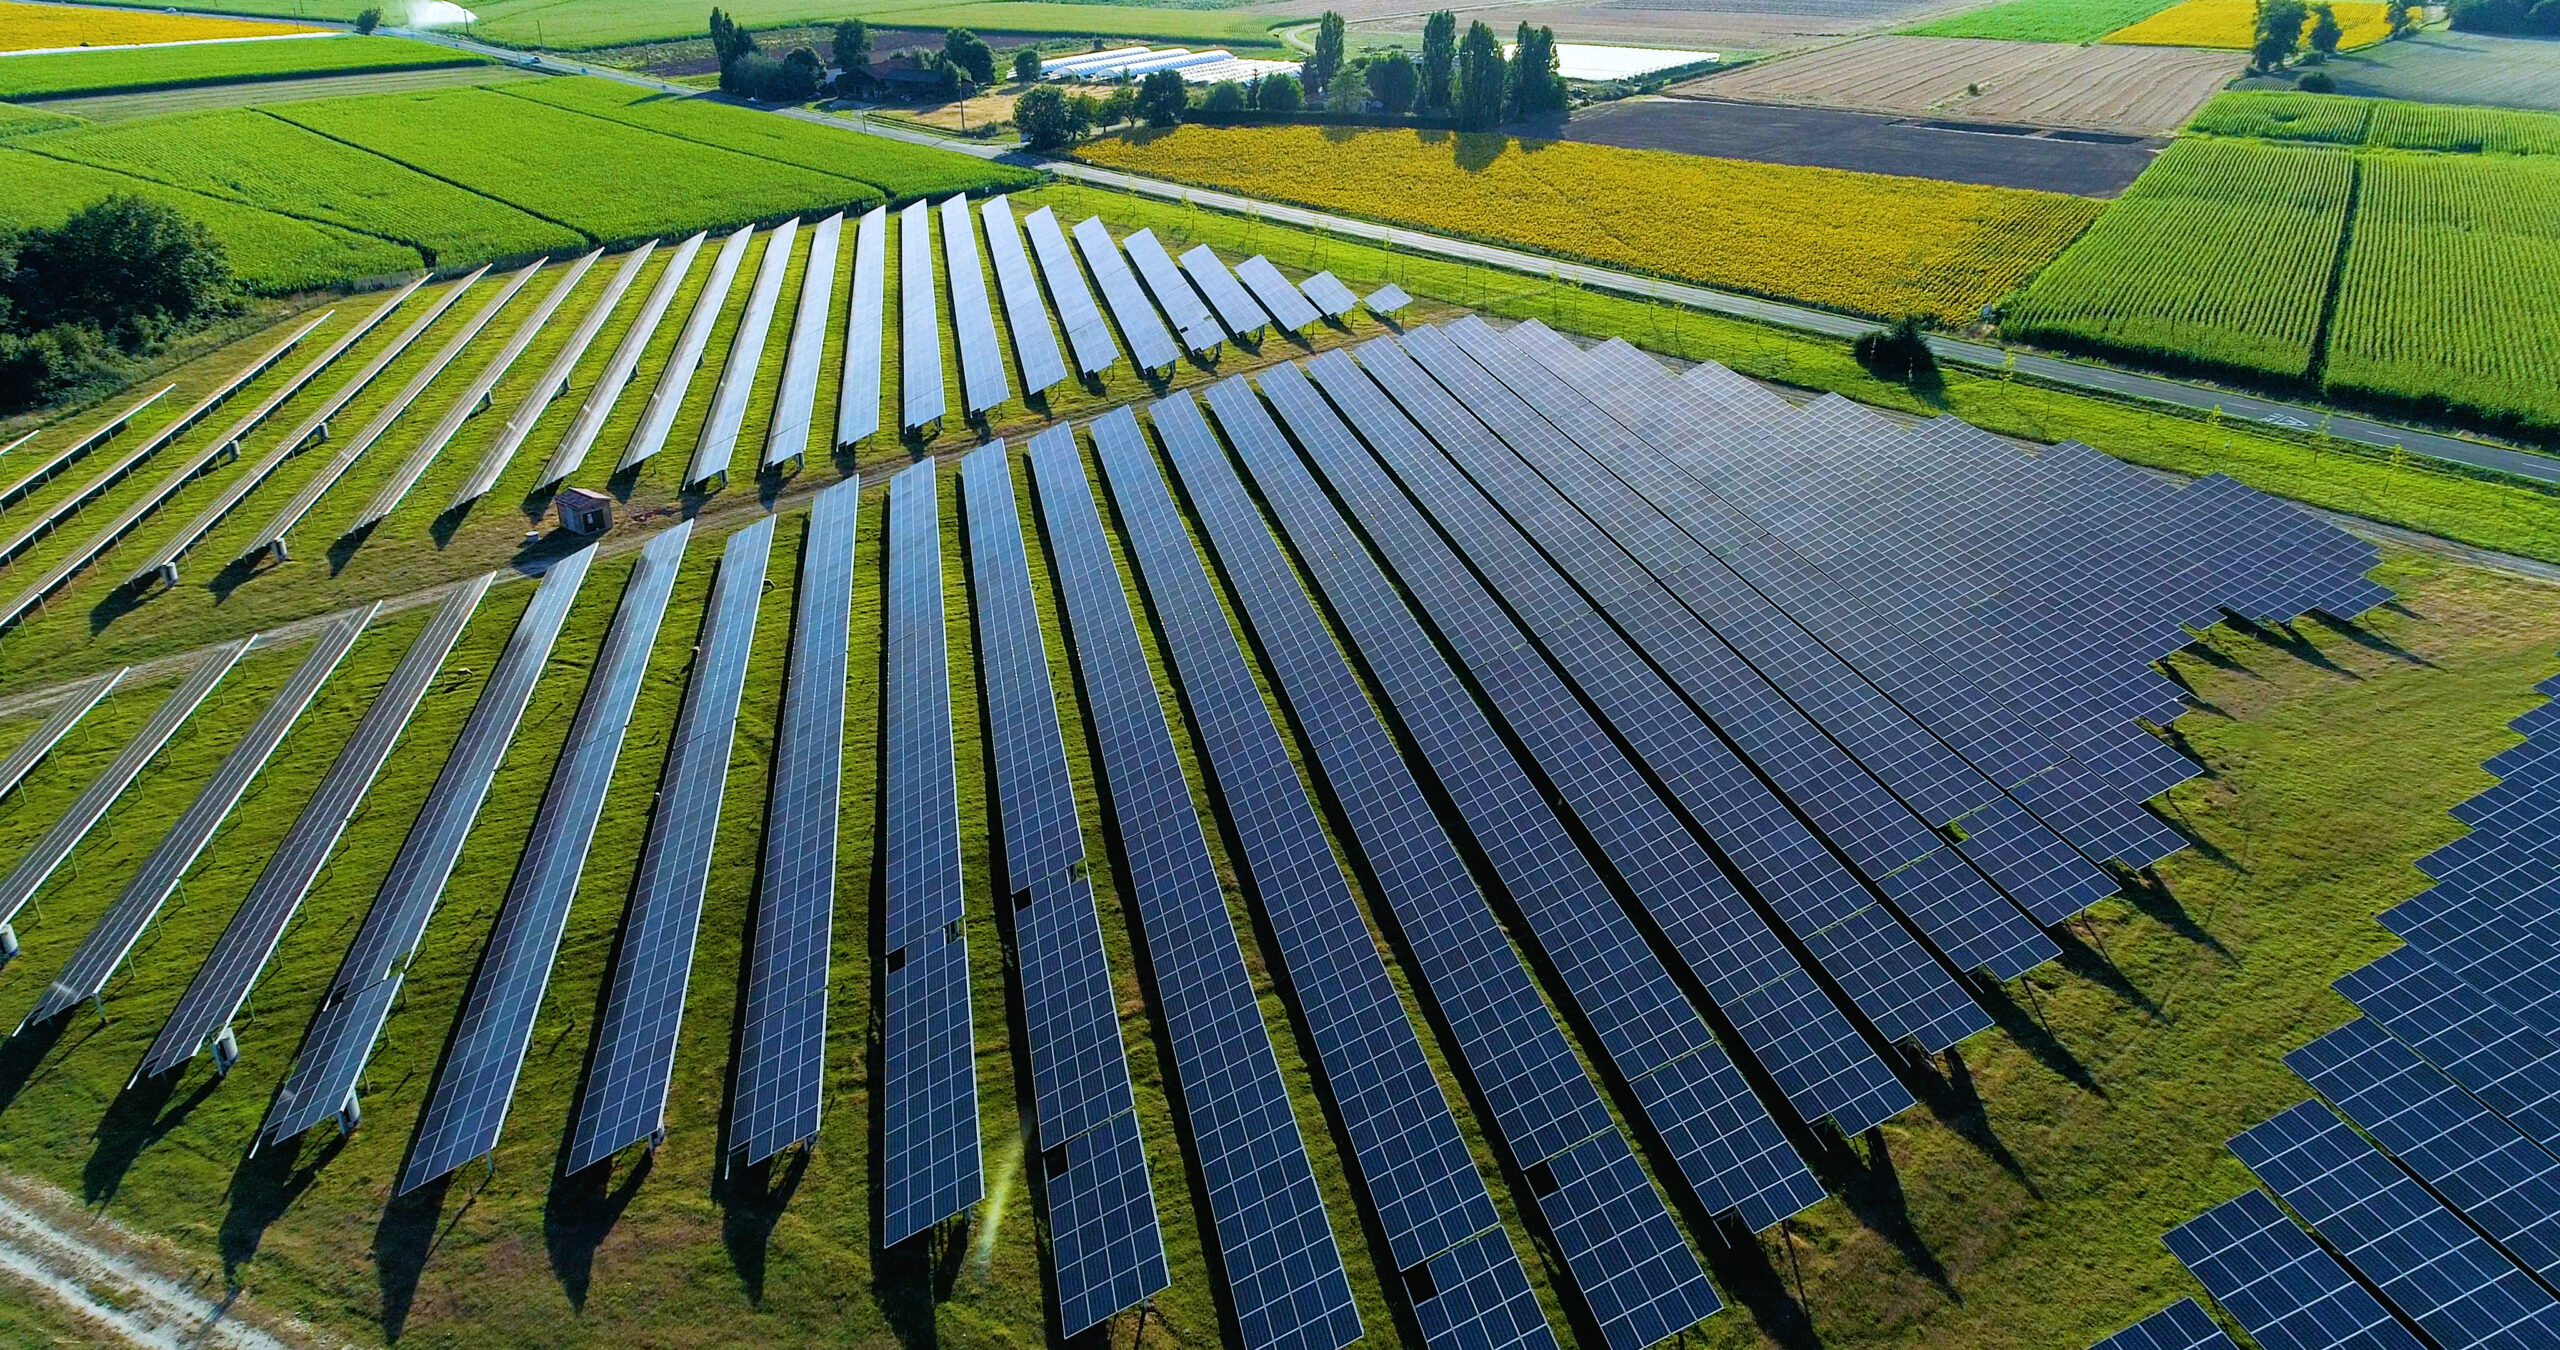 Solar panels in field for green energy, ESG initiative